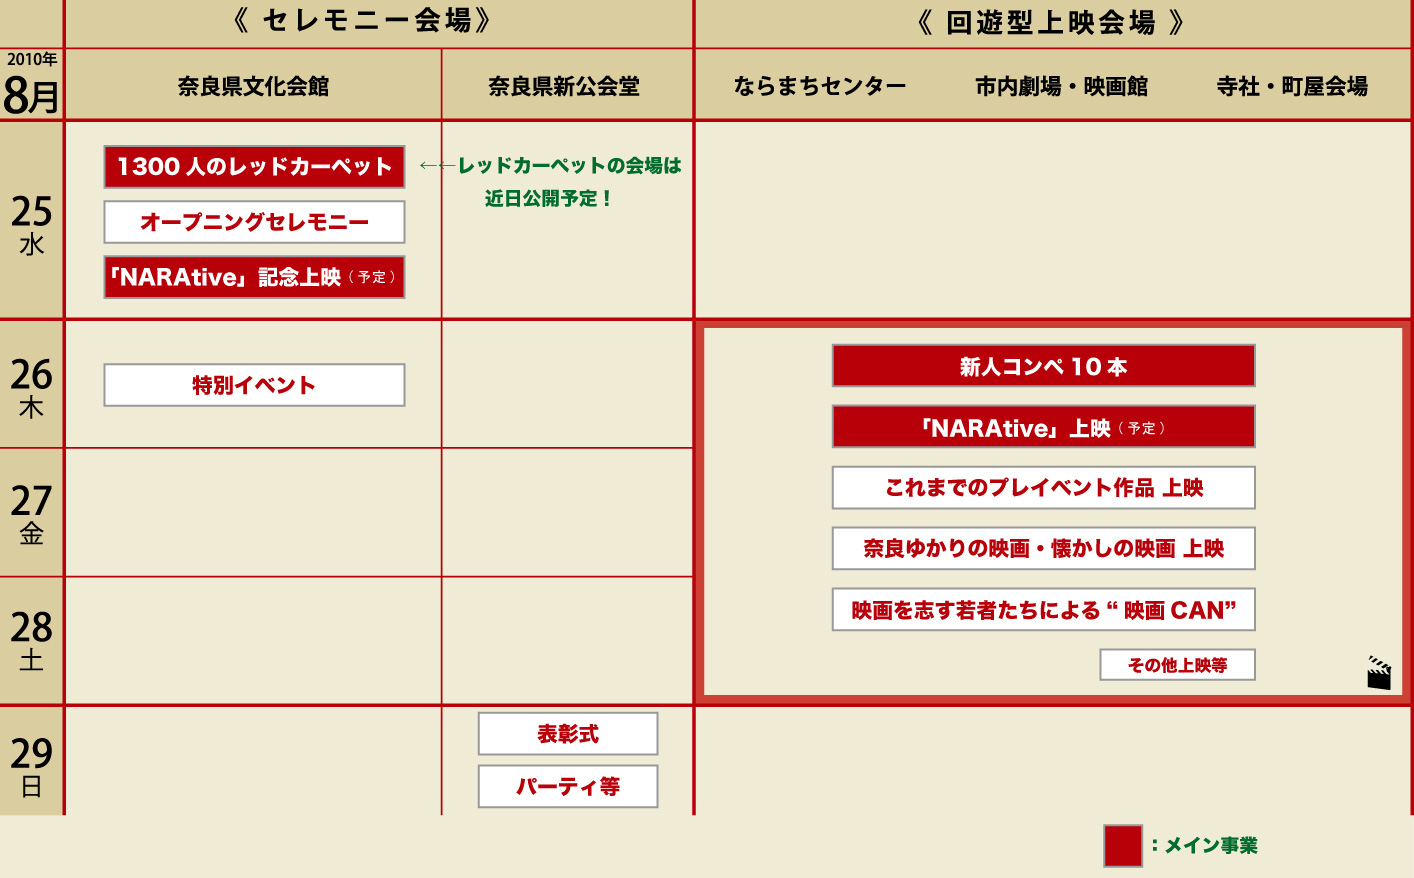 http://www.nara-iff.jp/2010/ja/programs/img/naraiff-program2.jpg